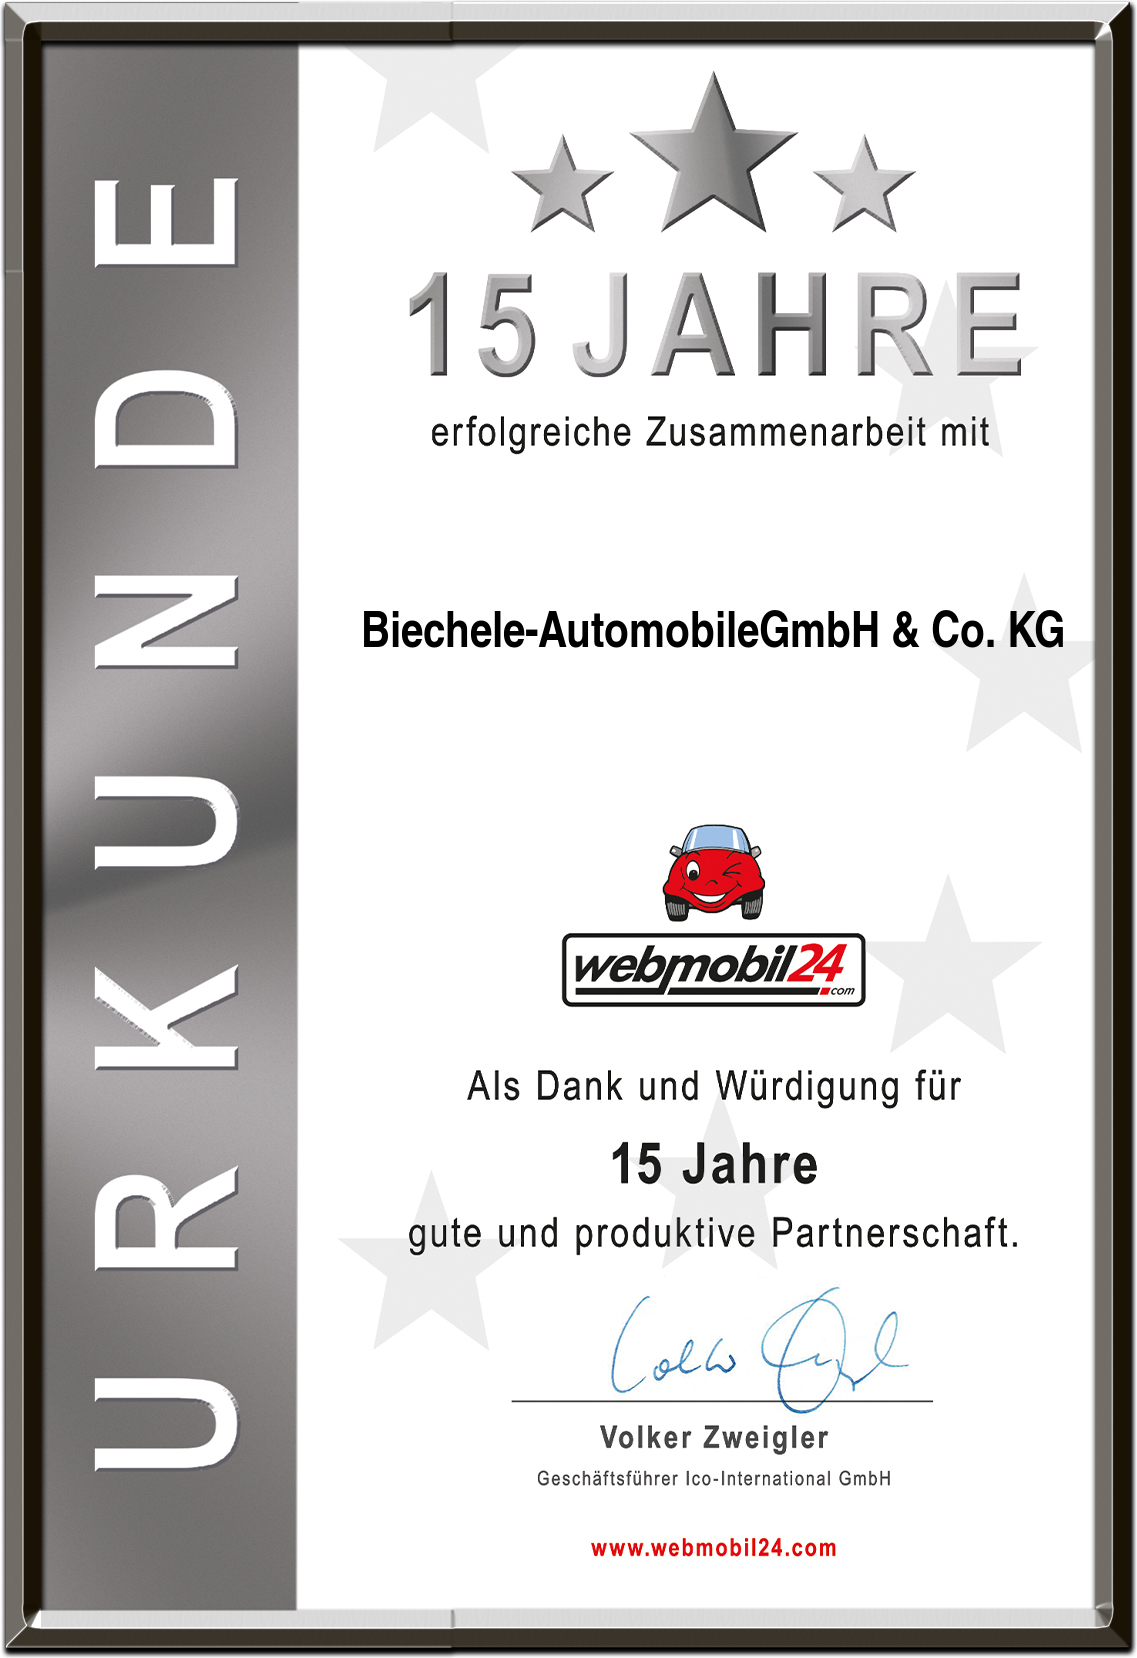 Biechele-AutomobileGmbH & Co. KG